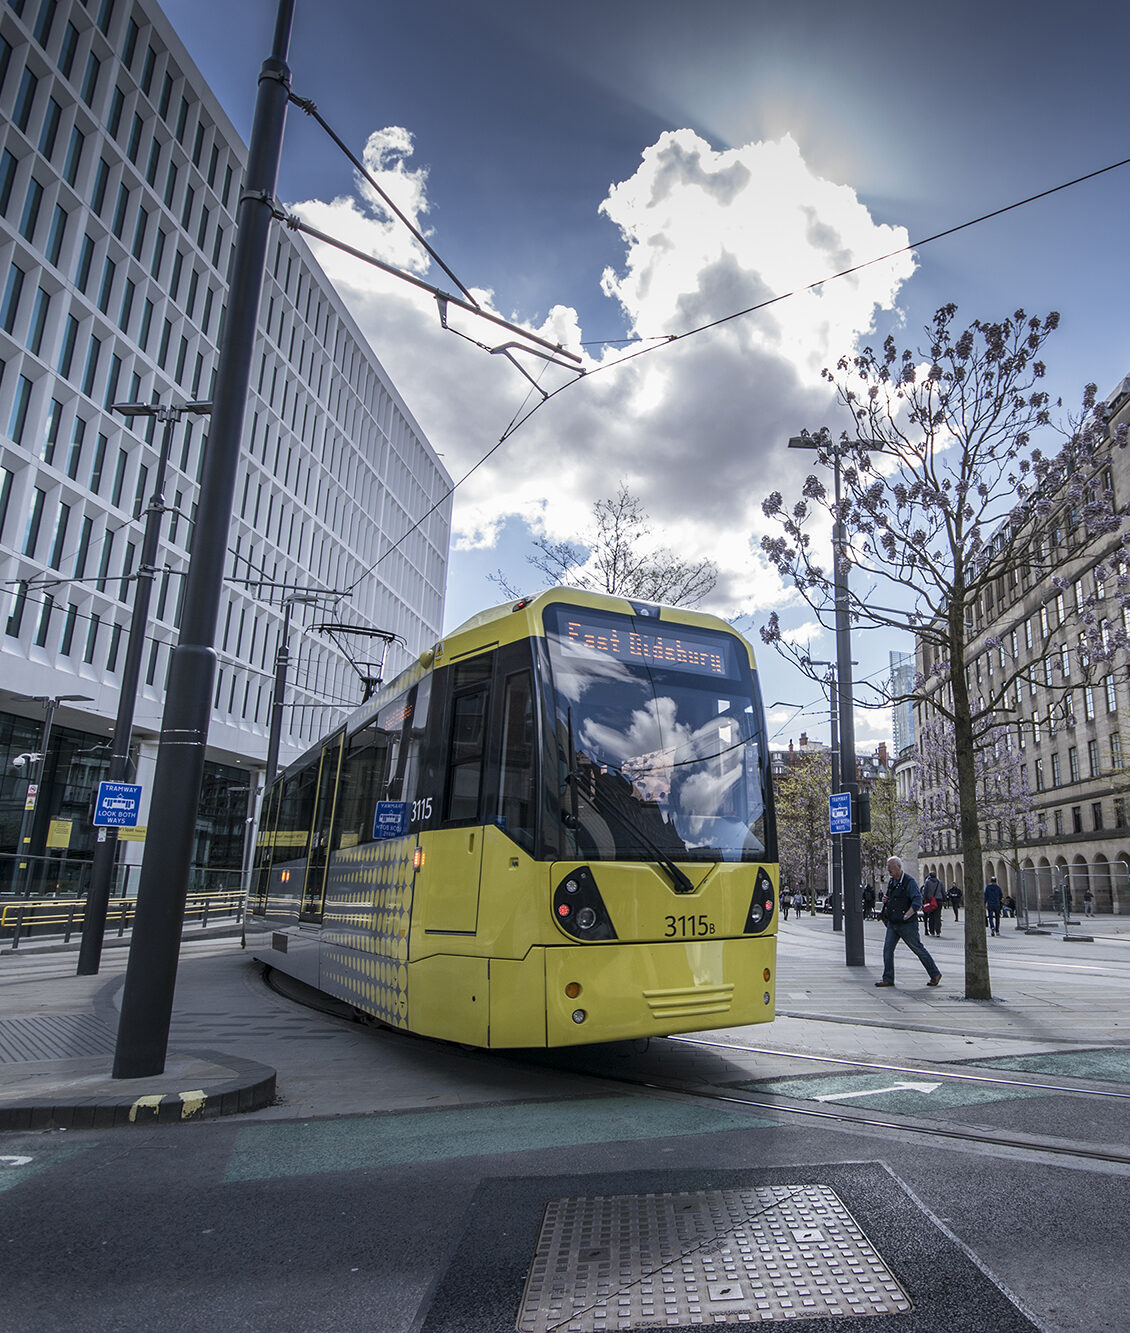 Metrolink tram in the city centre